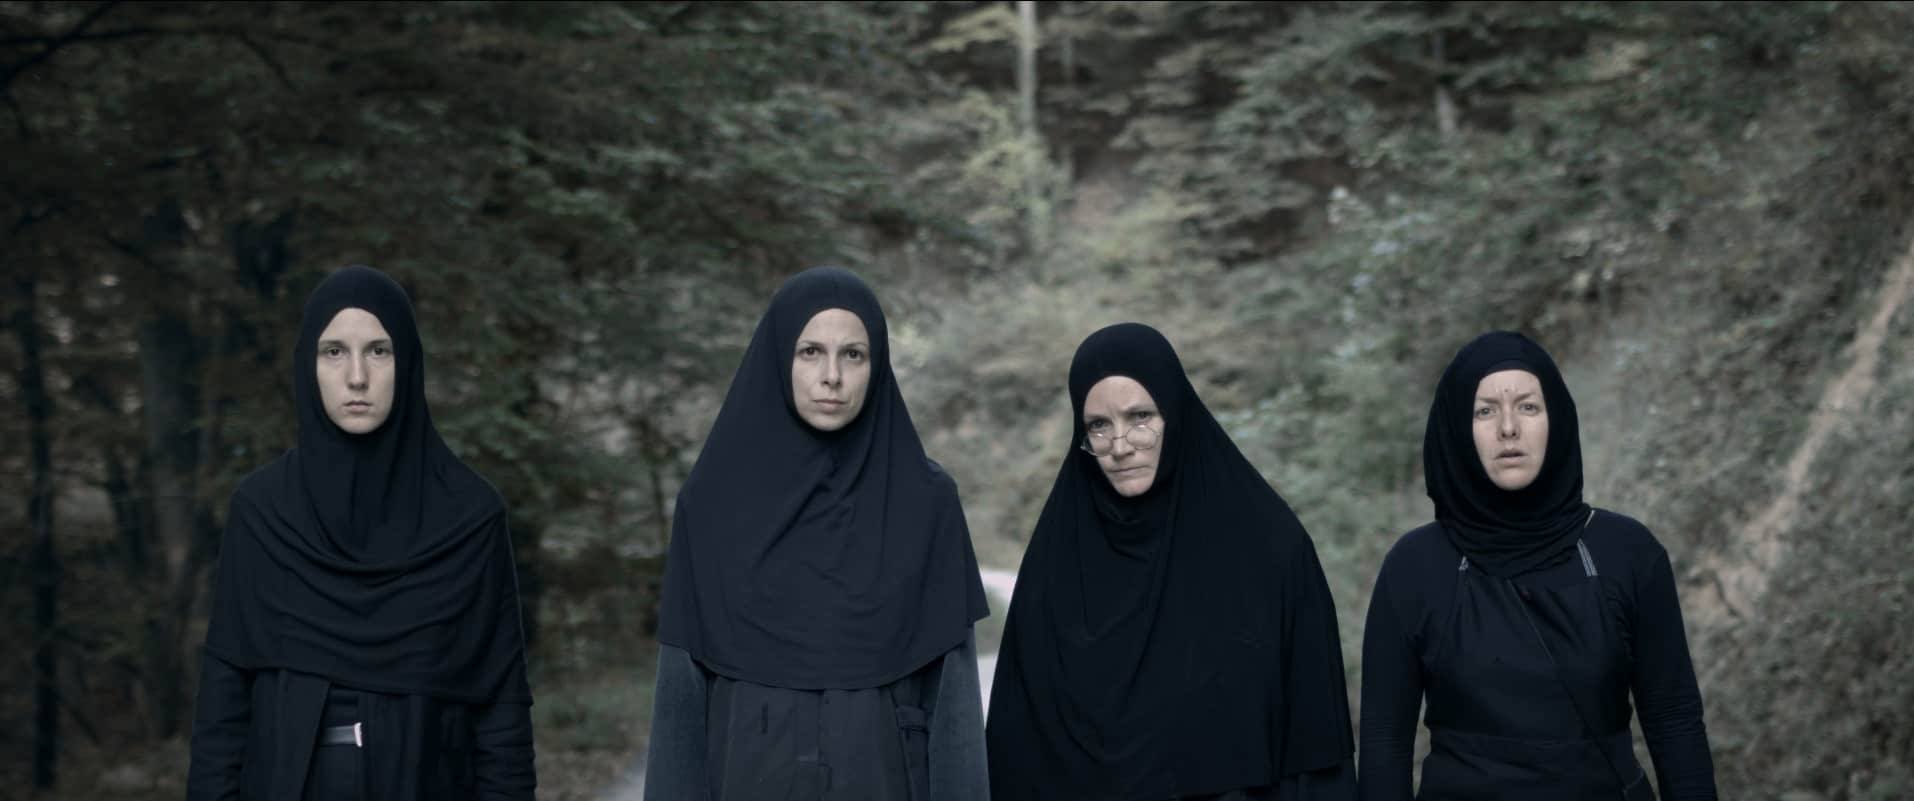 BYZANFEST 2021: Orthodox Christian Film Festival Announces Award Winning Films 2